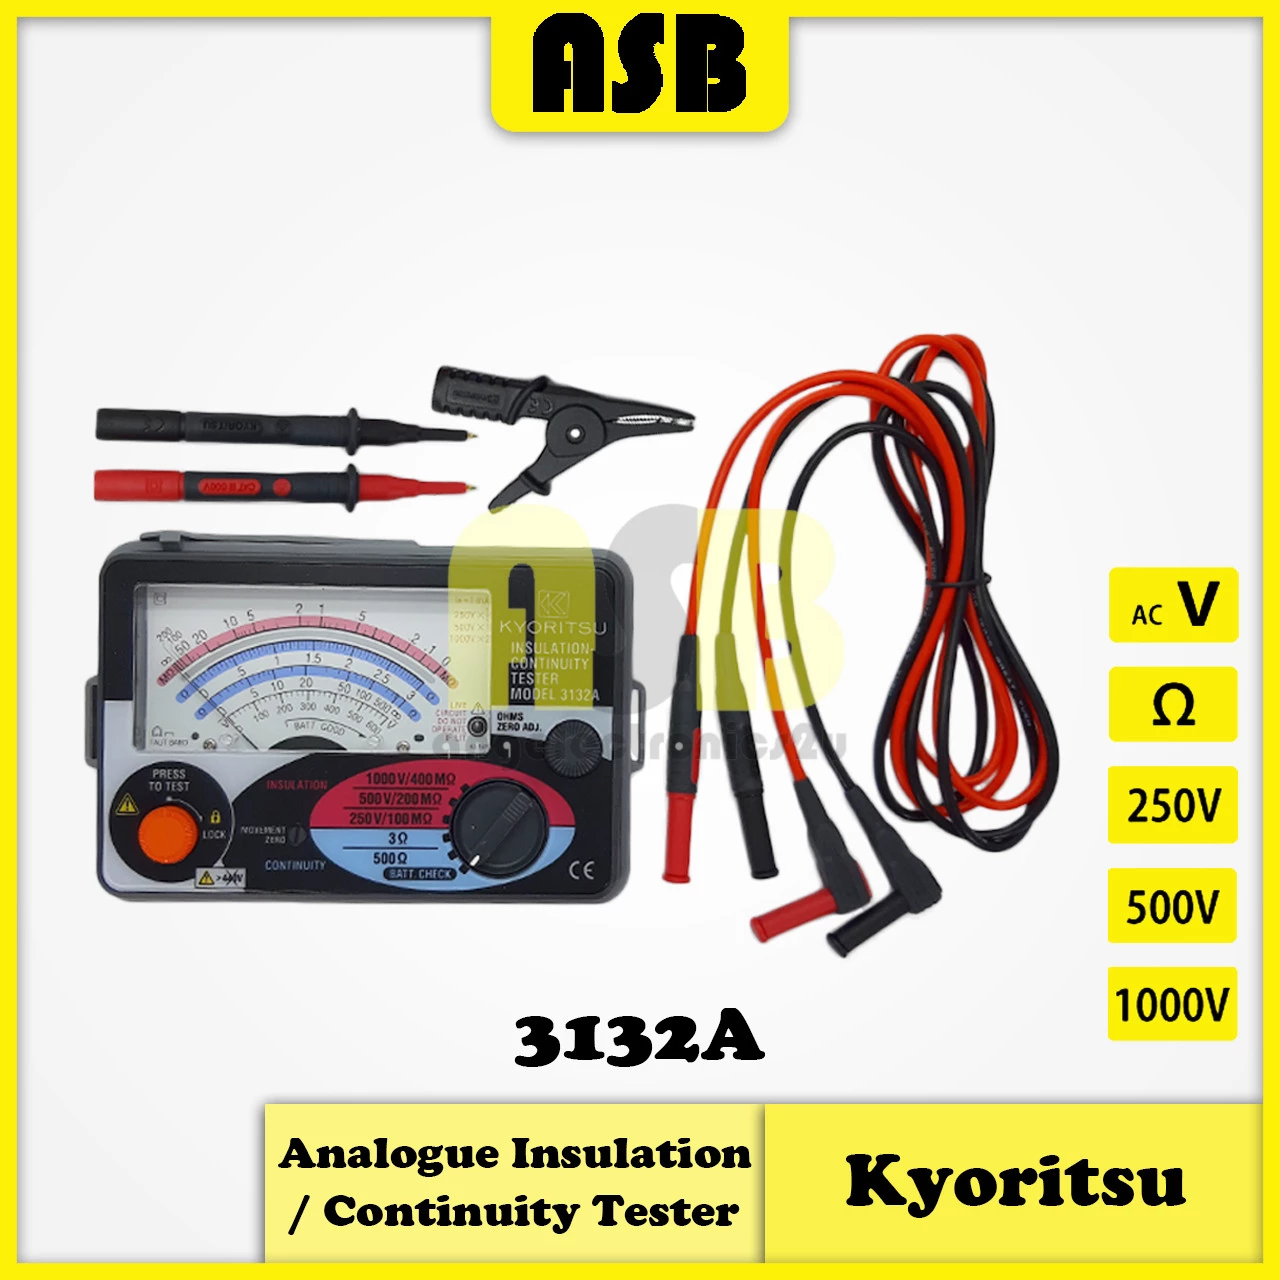 Kyoritsu 3132A Analogue Insulation / Continuity Tester (362007010)